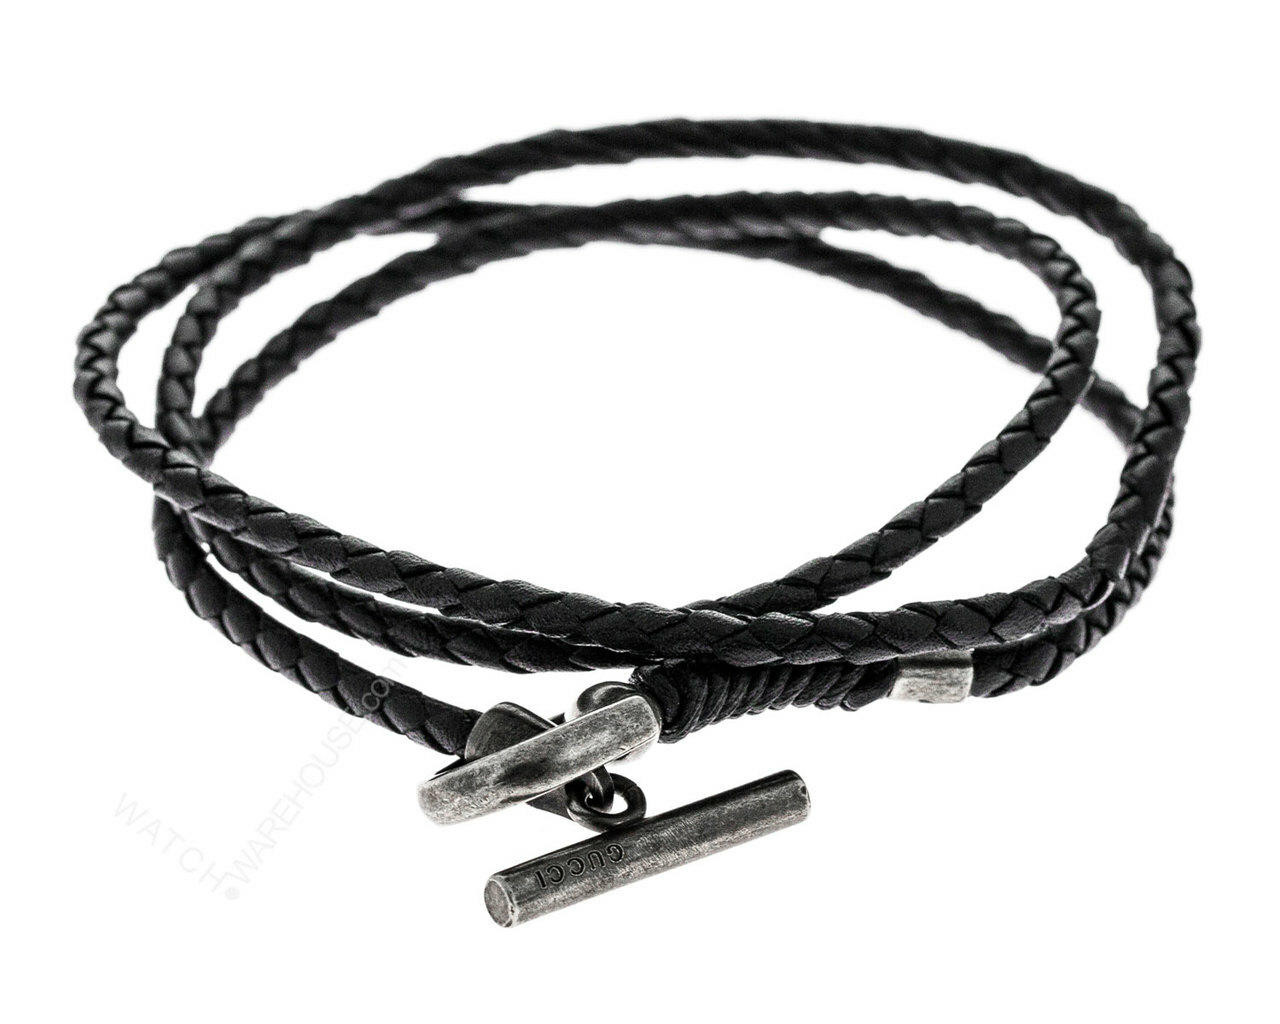 Gucci Leather Lion Head Wrap Bracelet - Black, Silver-Tone Metal Wrap,  Bracelets - GUC1462098 | The RealReal